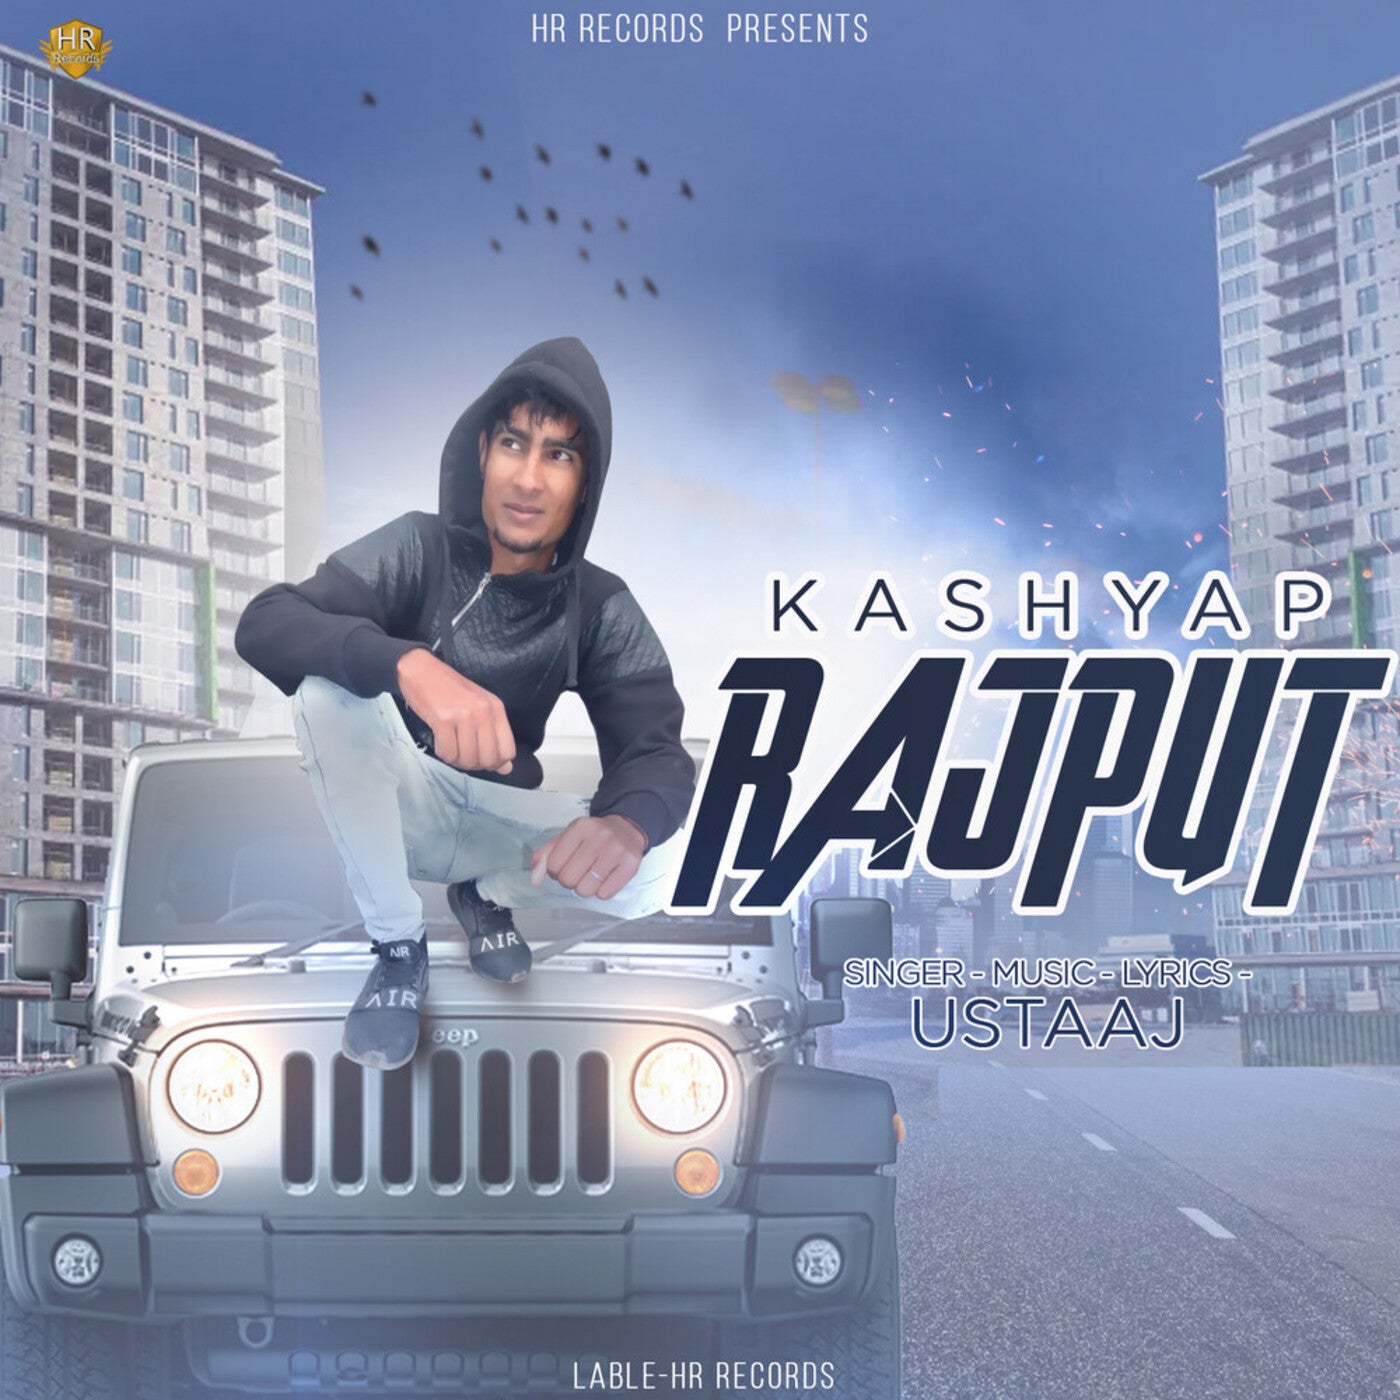 Kashyap Rajput by Ustaaj on Beatsource